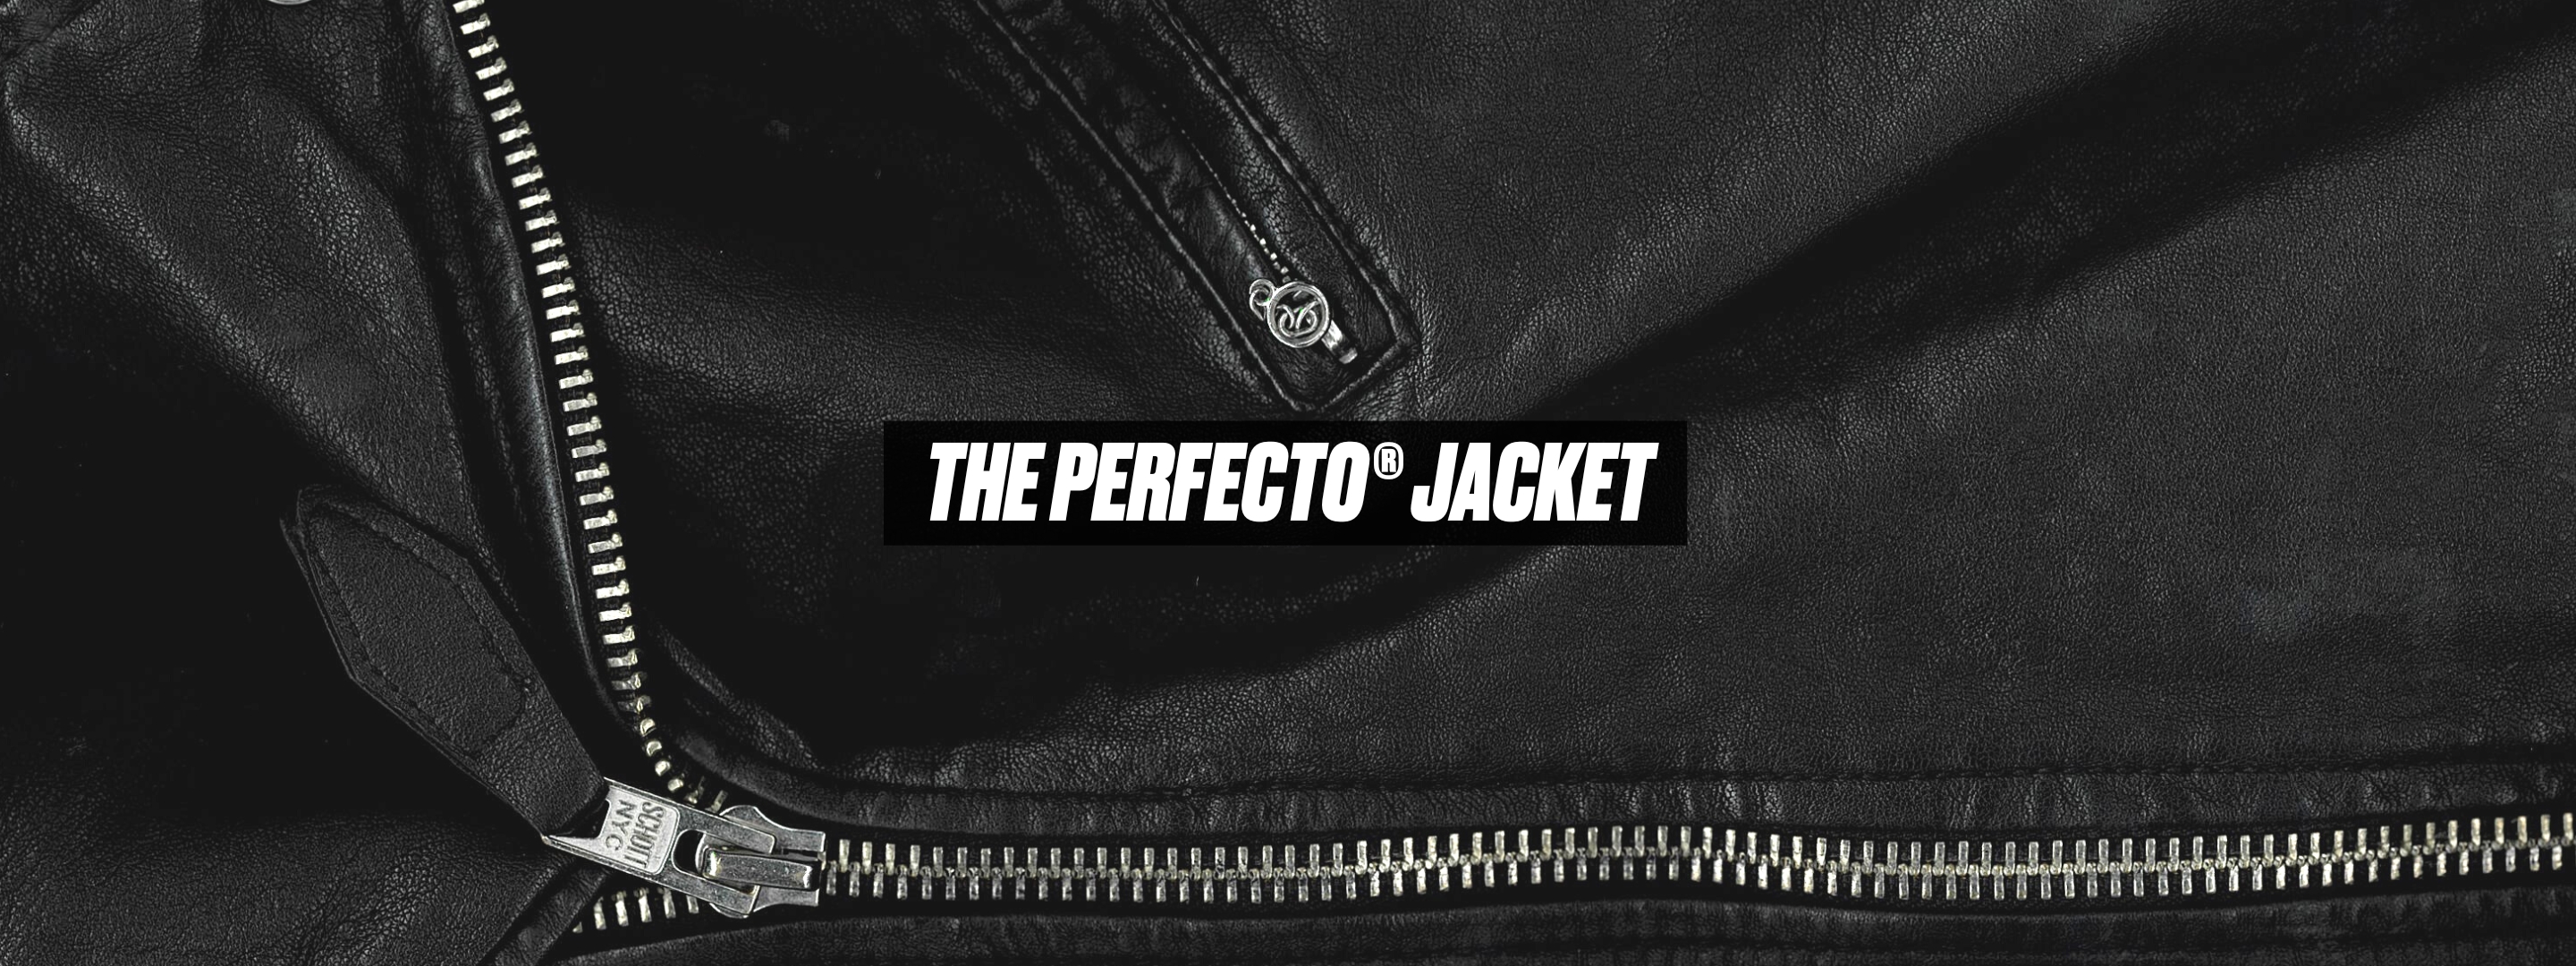 The Perfecto® jacket